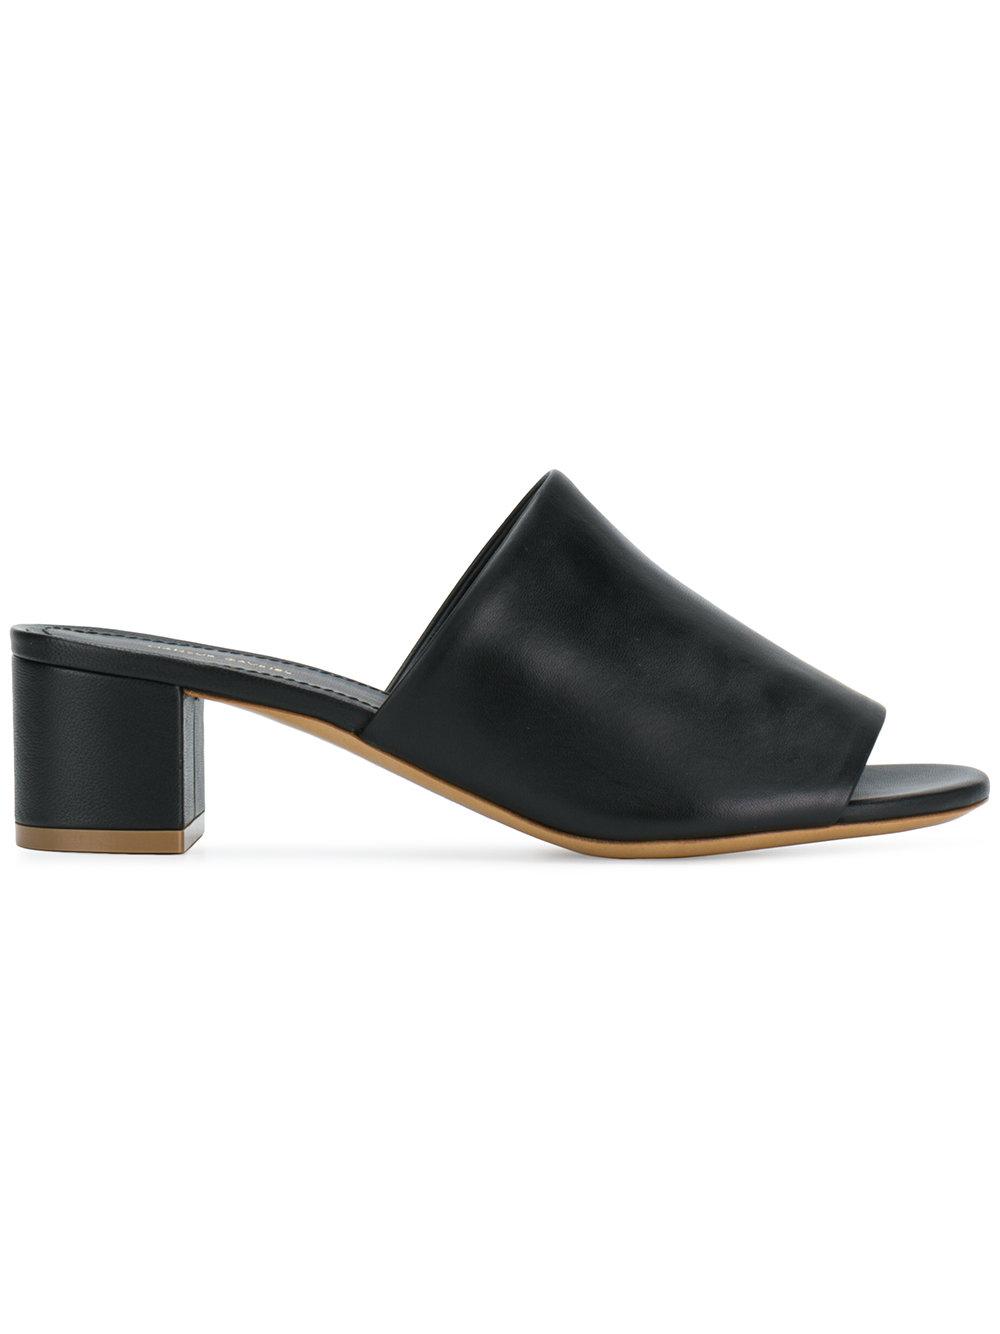 dressy black sandals low heel